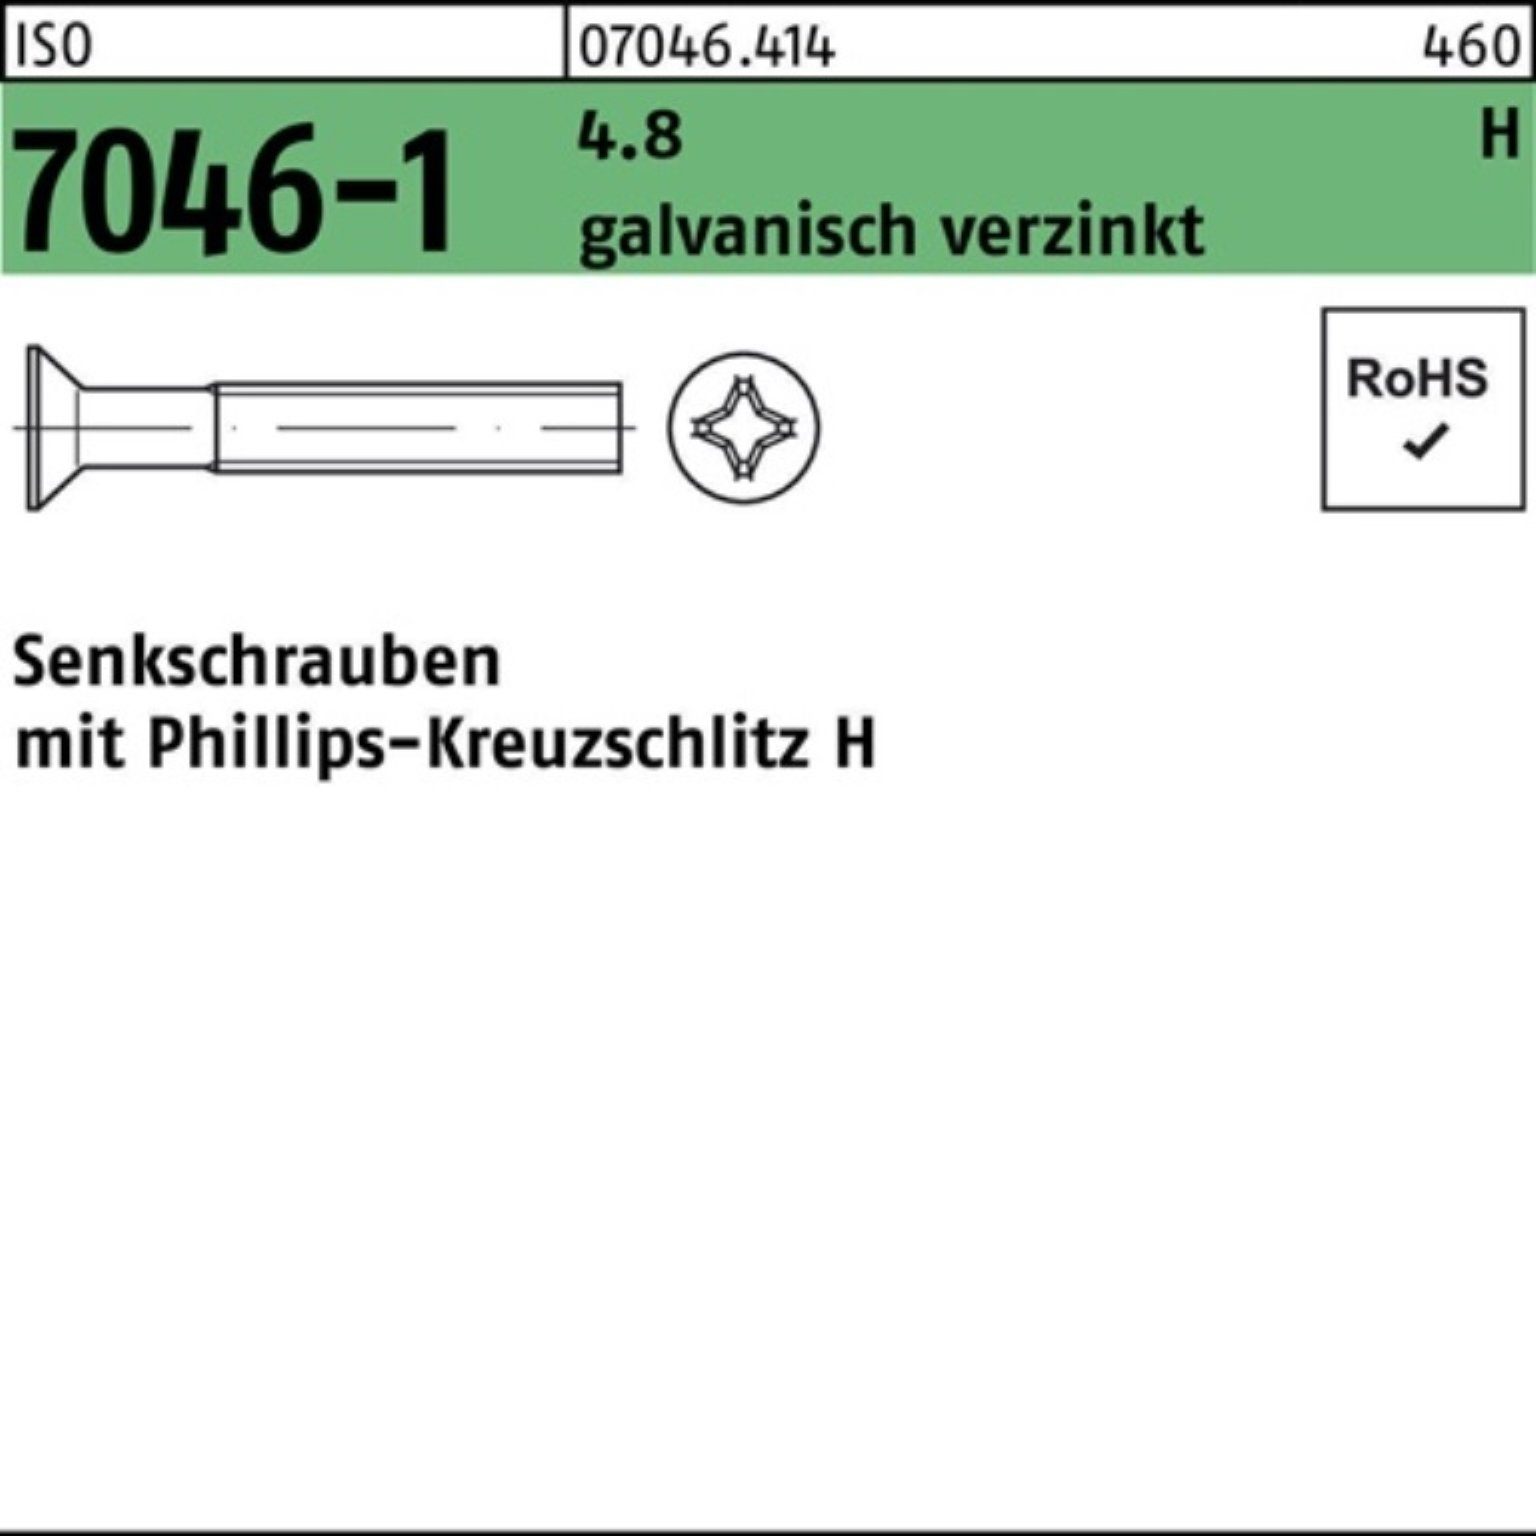 Reyher Senkschraube 100er 100St. 4.8 galv.verz. I M10x20-H Pack 7046-1 ISO Senkschraube PH